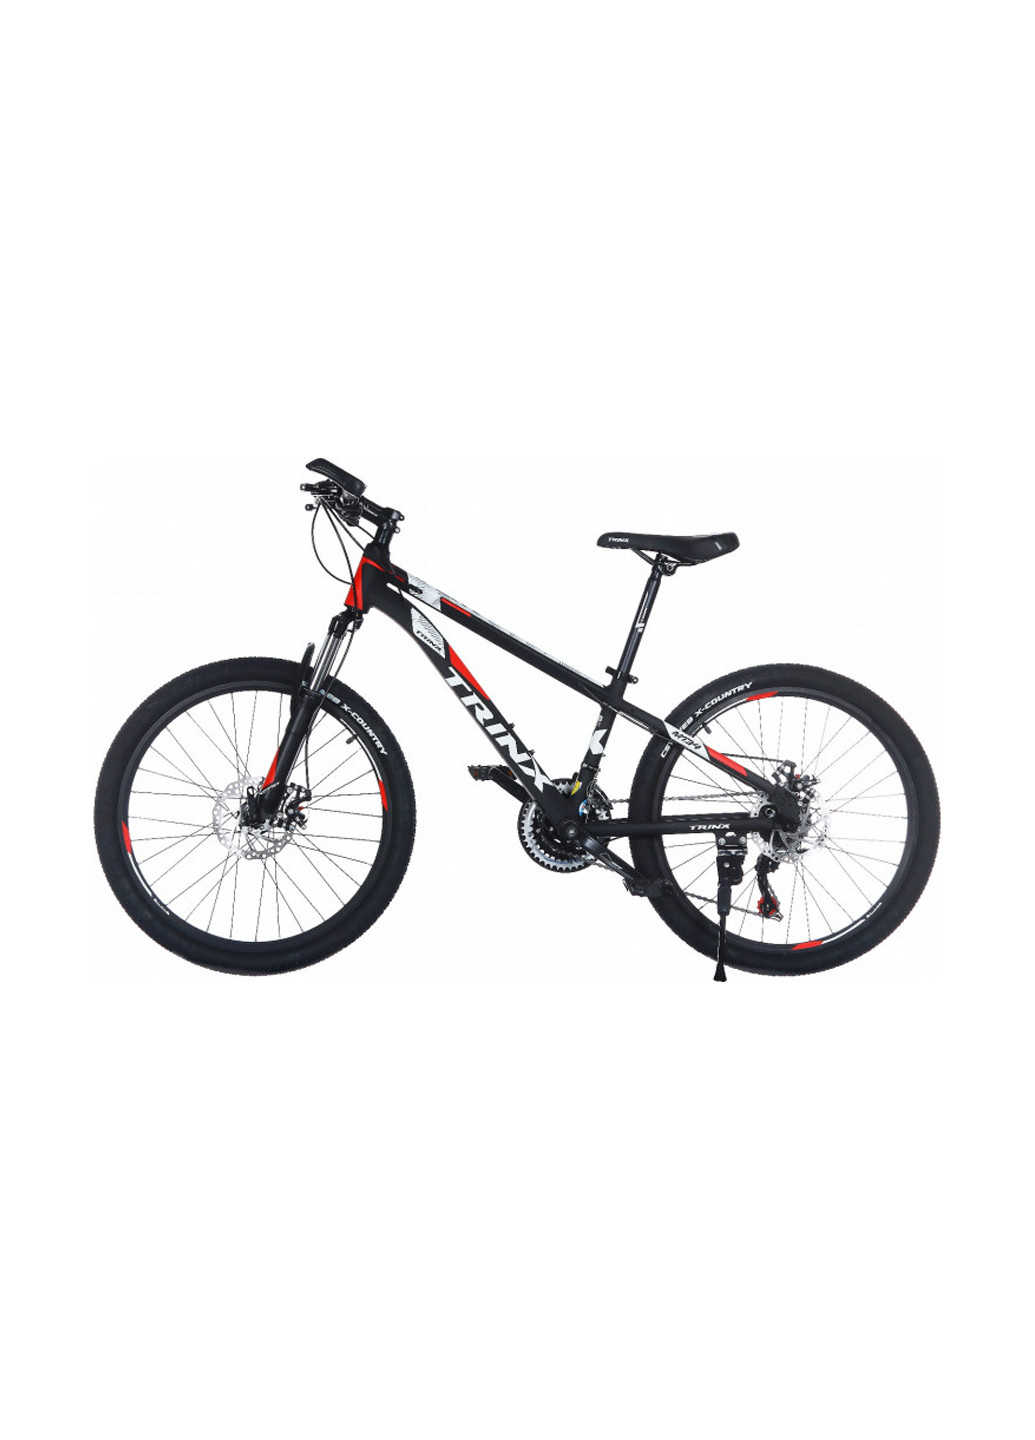 Велосипед Trinx m134 24"х12.5" matt-black-red-white (146489535)